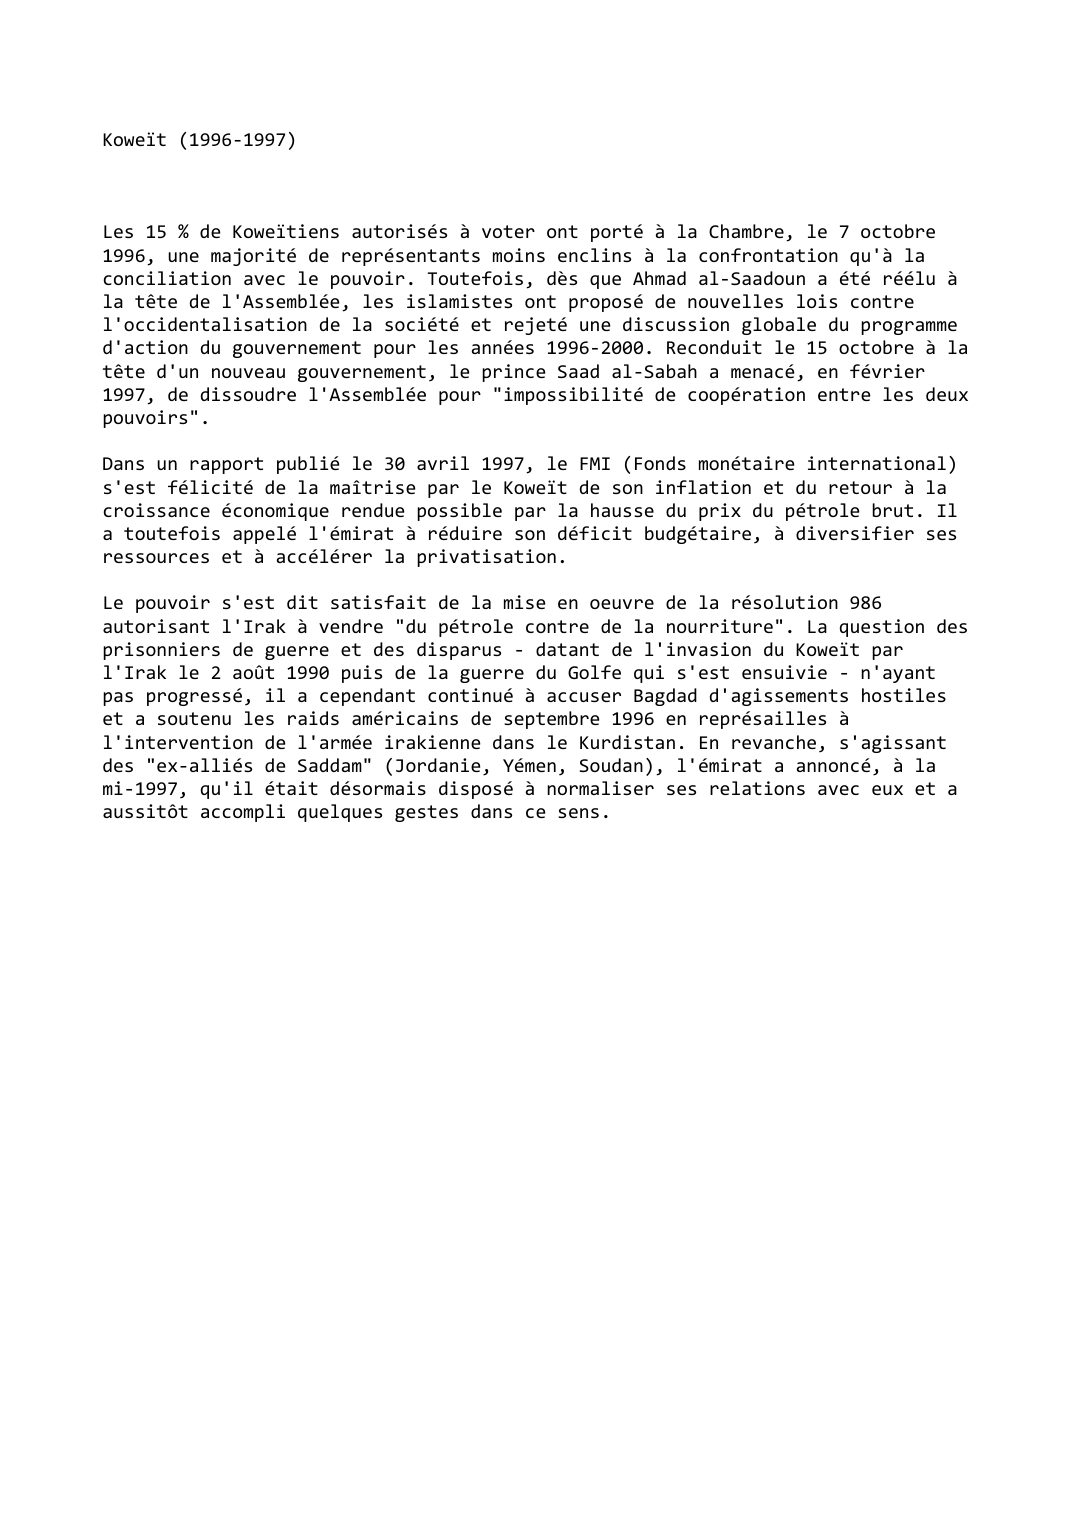 Prévisualisation du document Koweït (1996-1997)